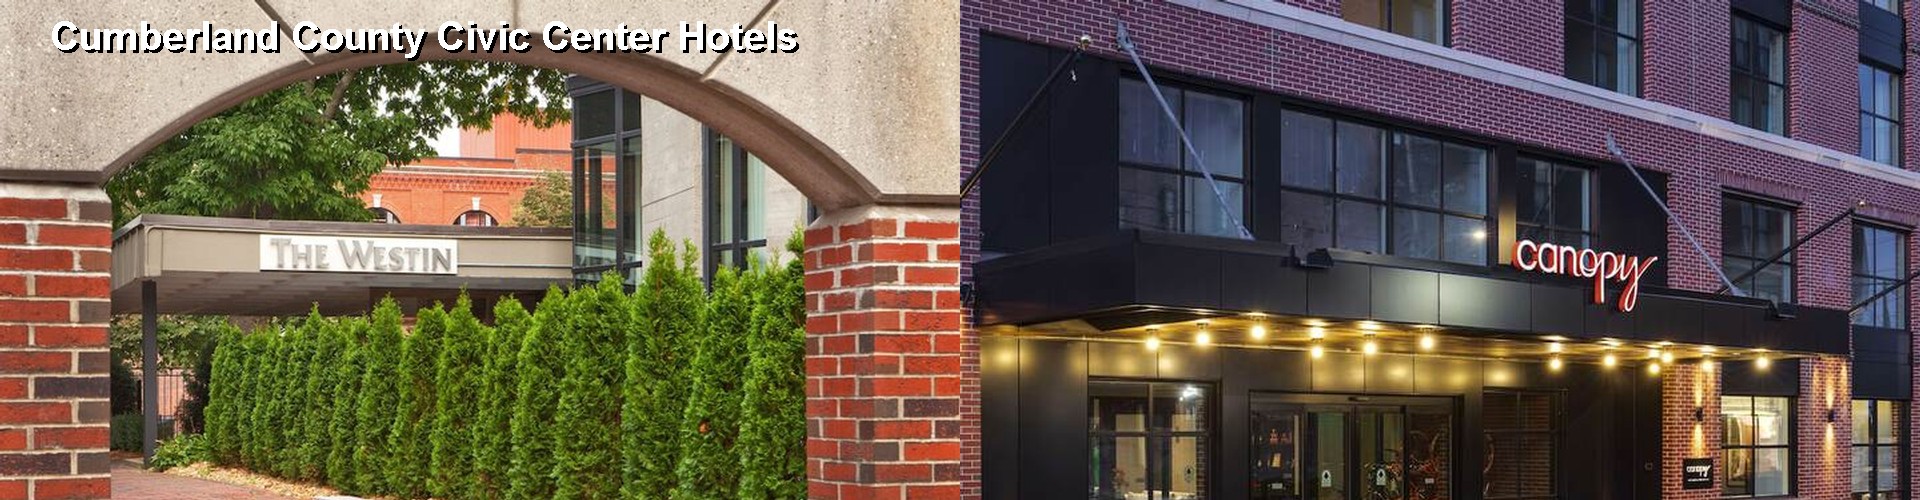 5 Best Hotels near Cumberland County Civic Center